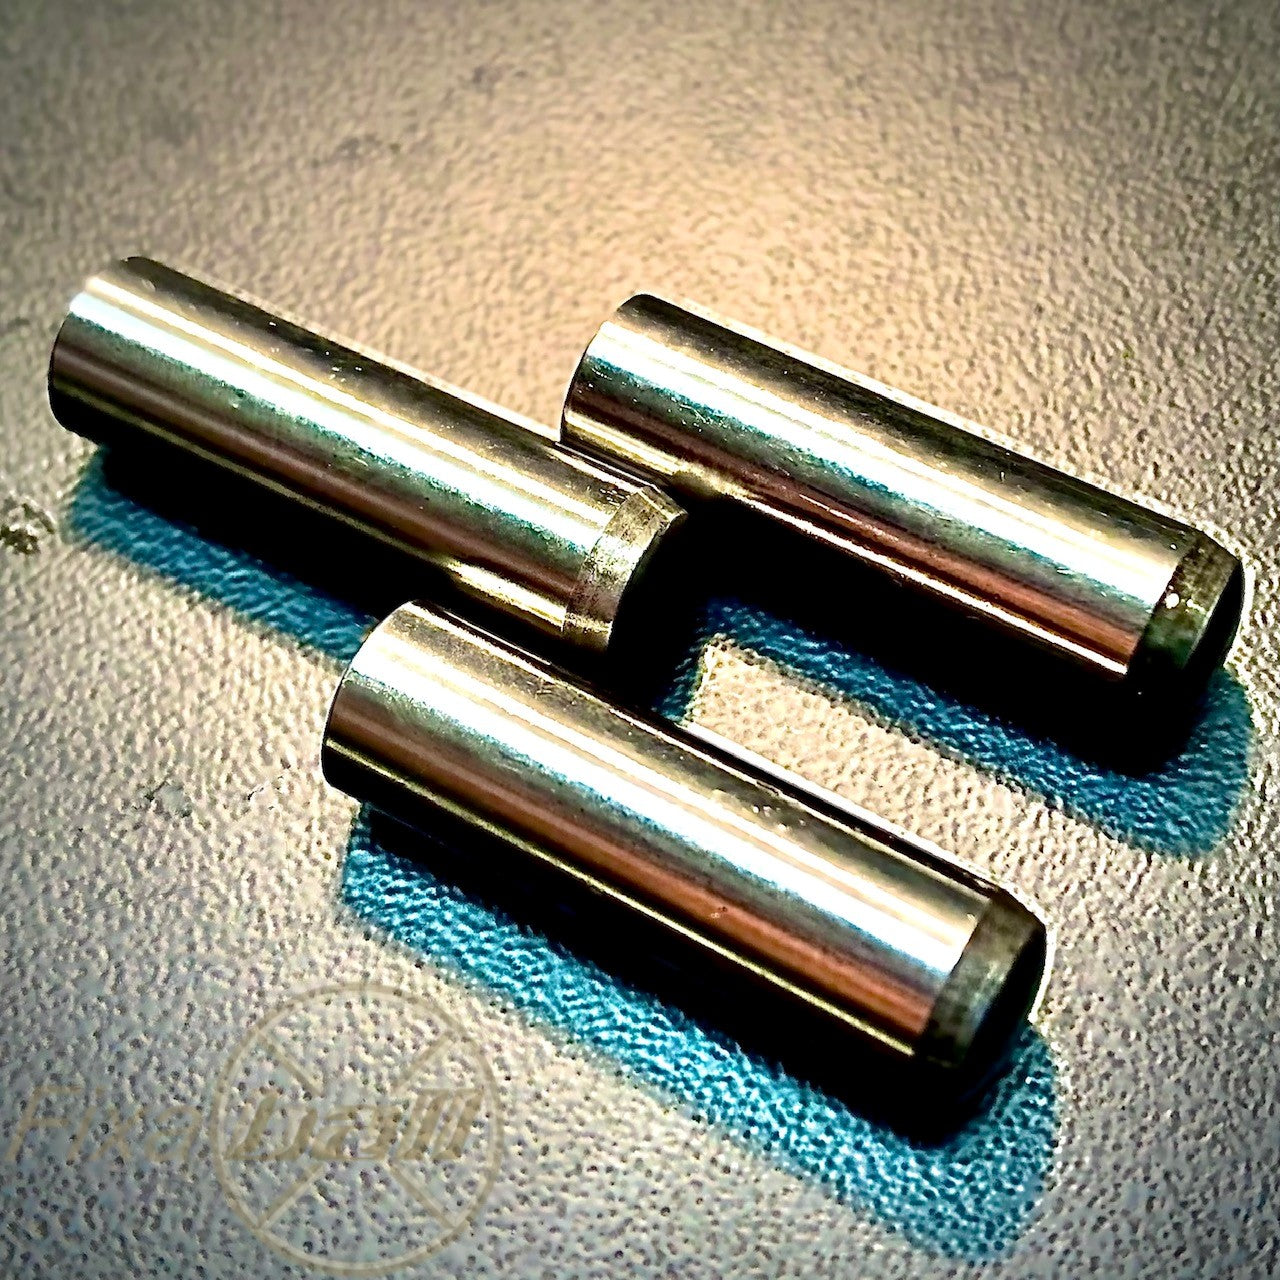 3mm Dowel Pins Hardened & Ground, Steel, DIN 6325 Dowel Pins 3mm Dowel Pins Hardened & Ground, Steel, DIN 6325 Dowel Pins – Harden and Ground